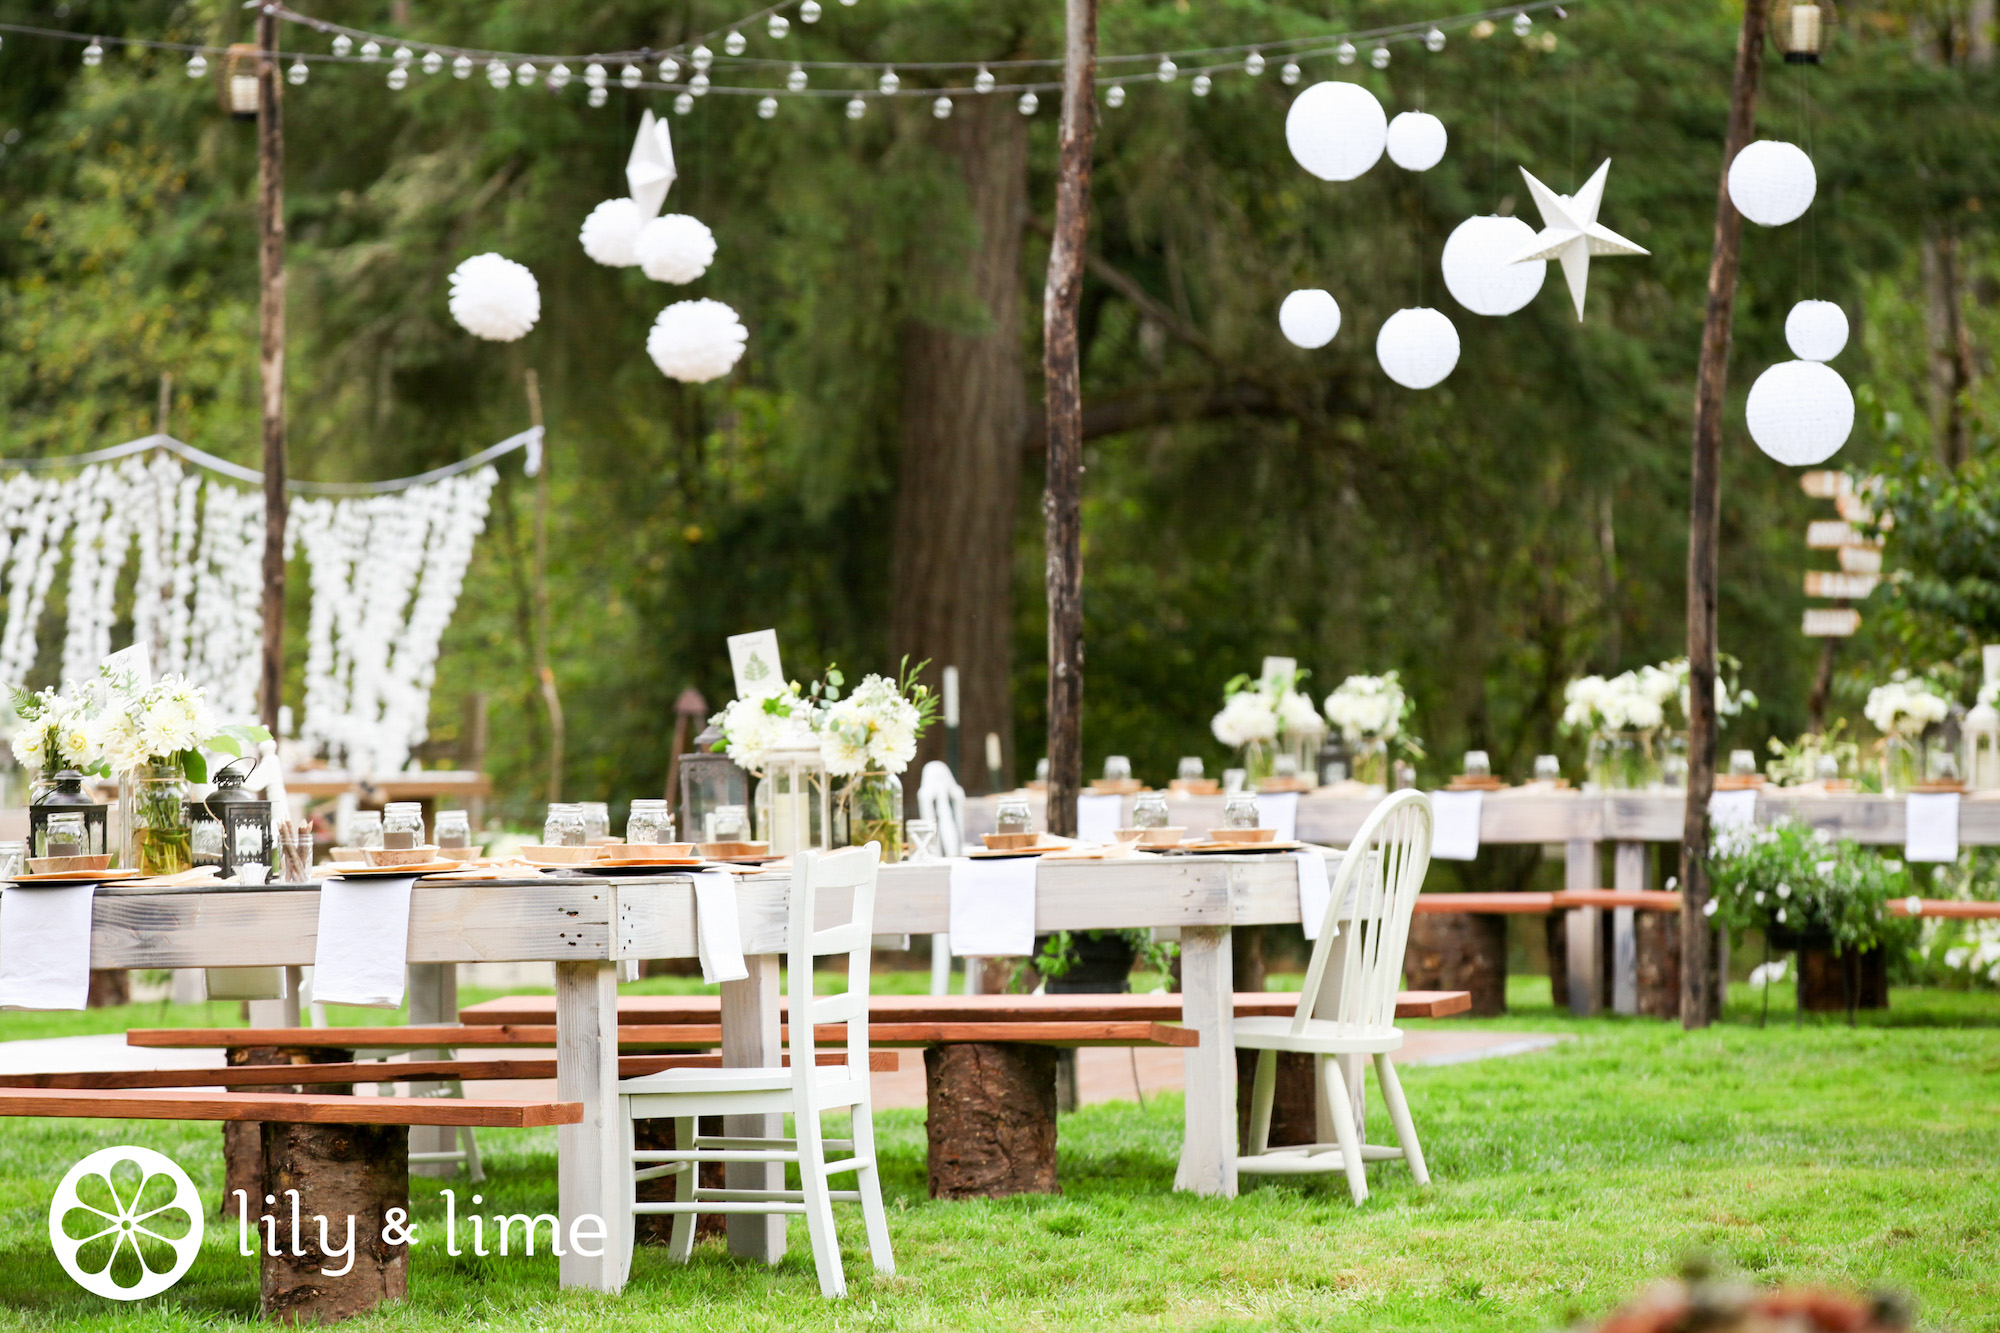 outdoorsy wedding decor ideas